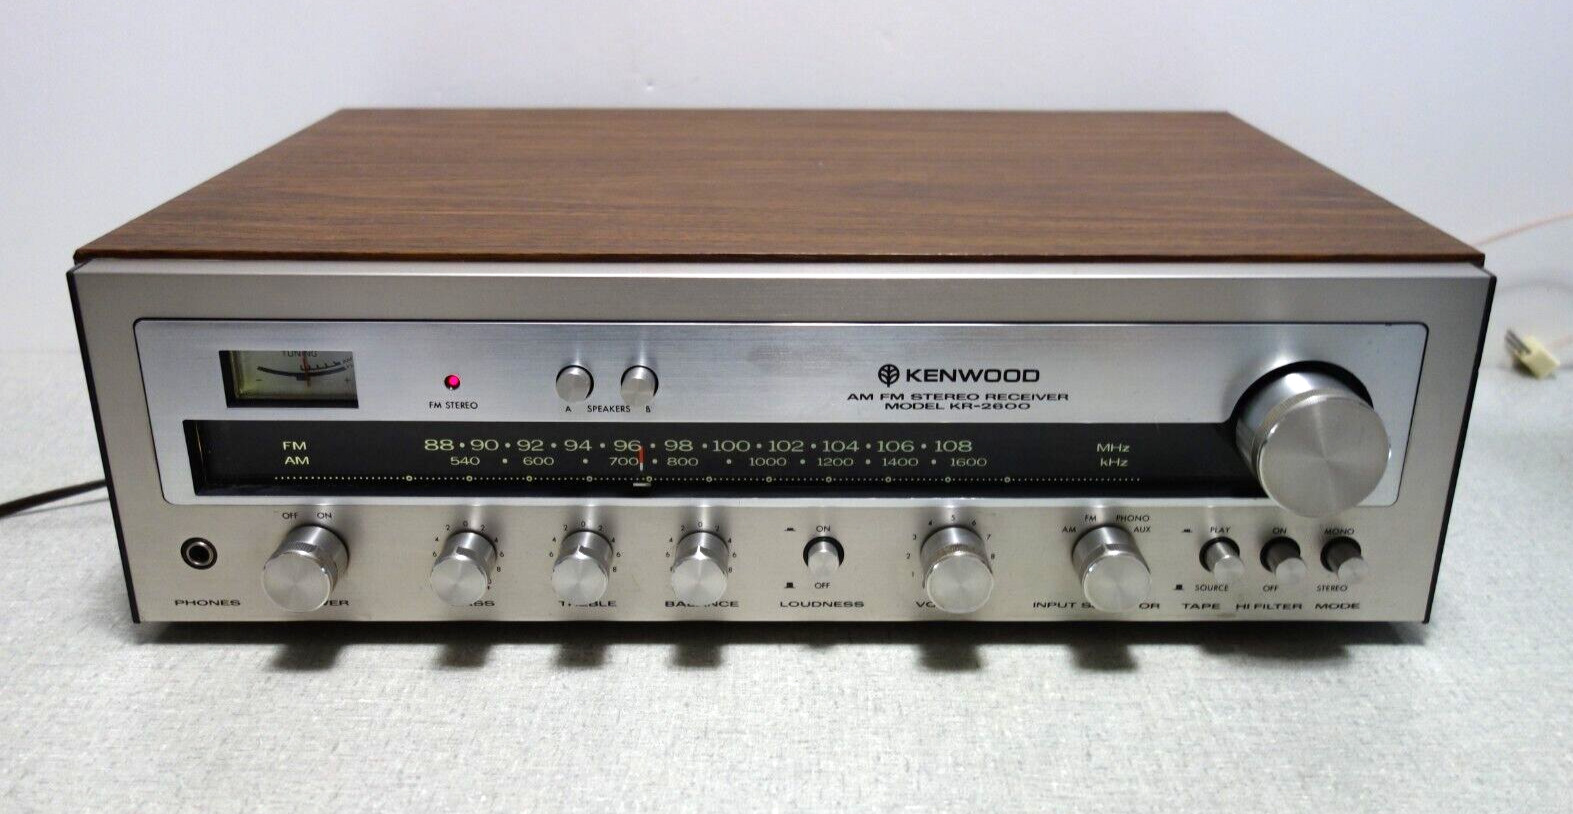 Vintage Kenwood KR-2600 AM FM Stereo Receiver Tested, Working - Made in Japan